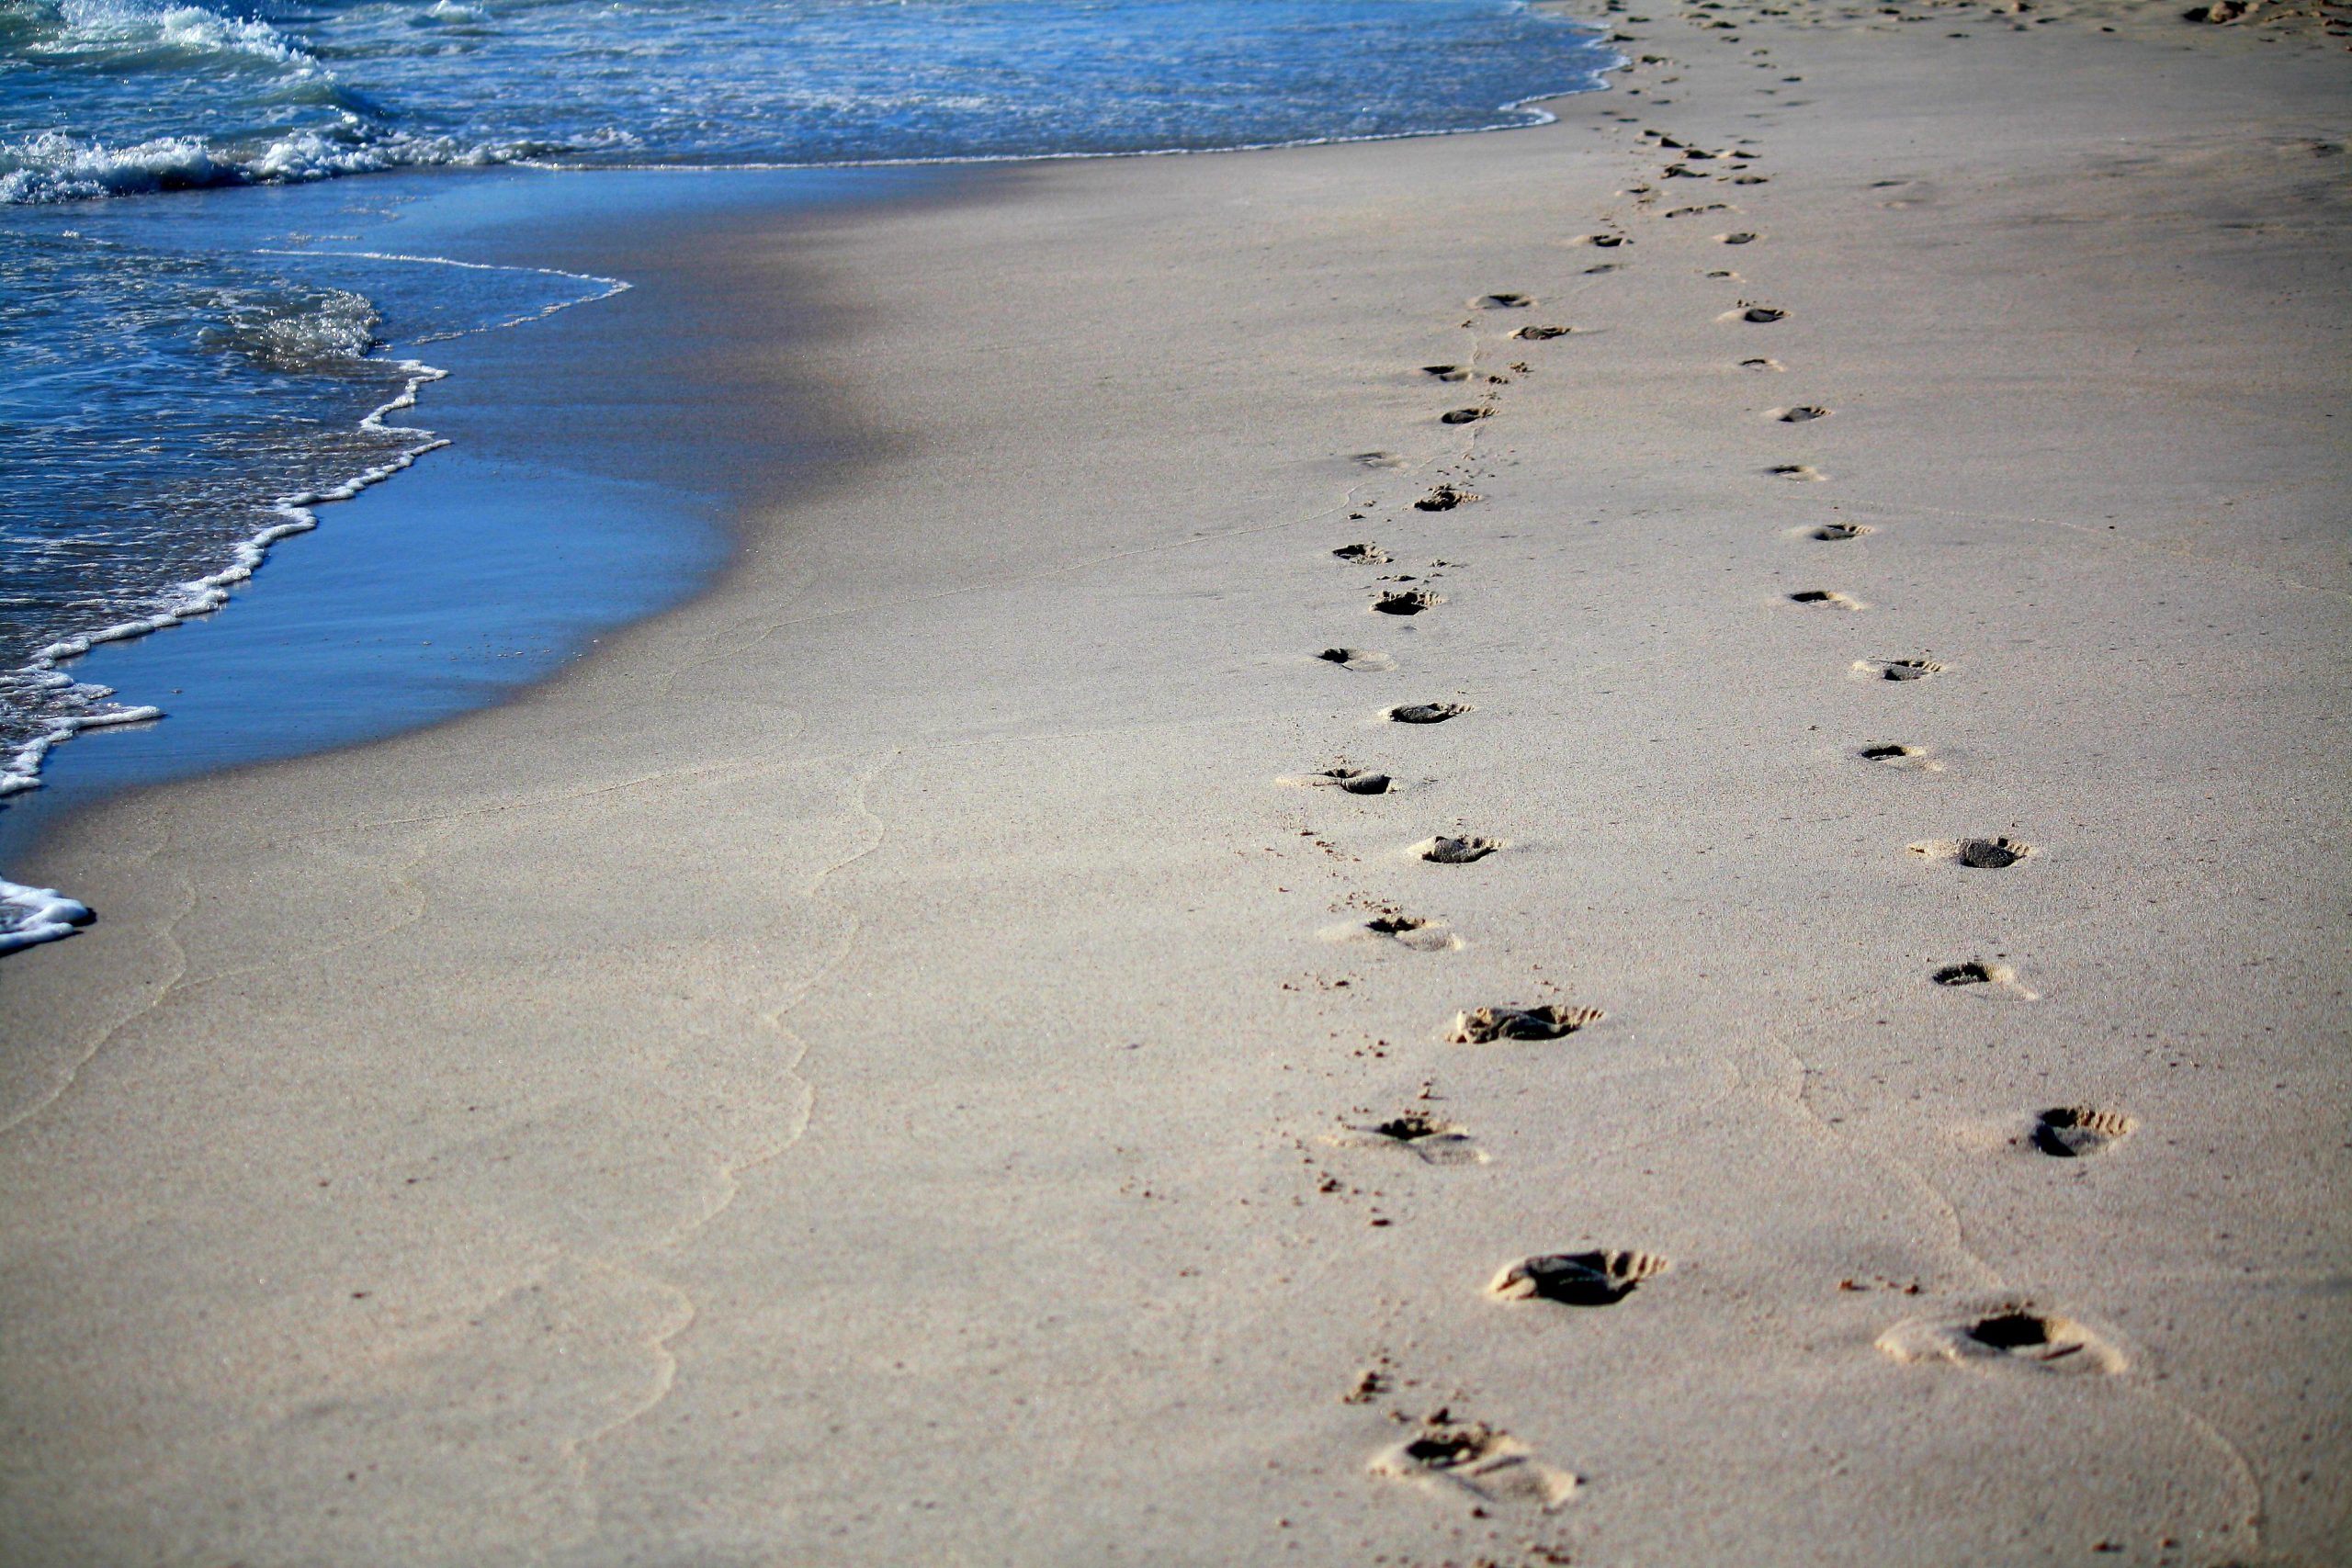  Parent-child session - Footprints in sand